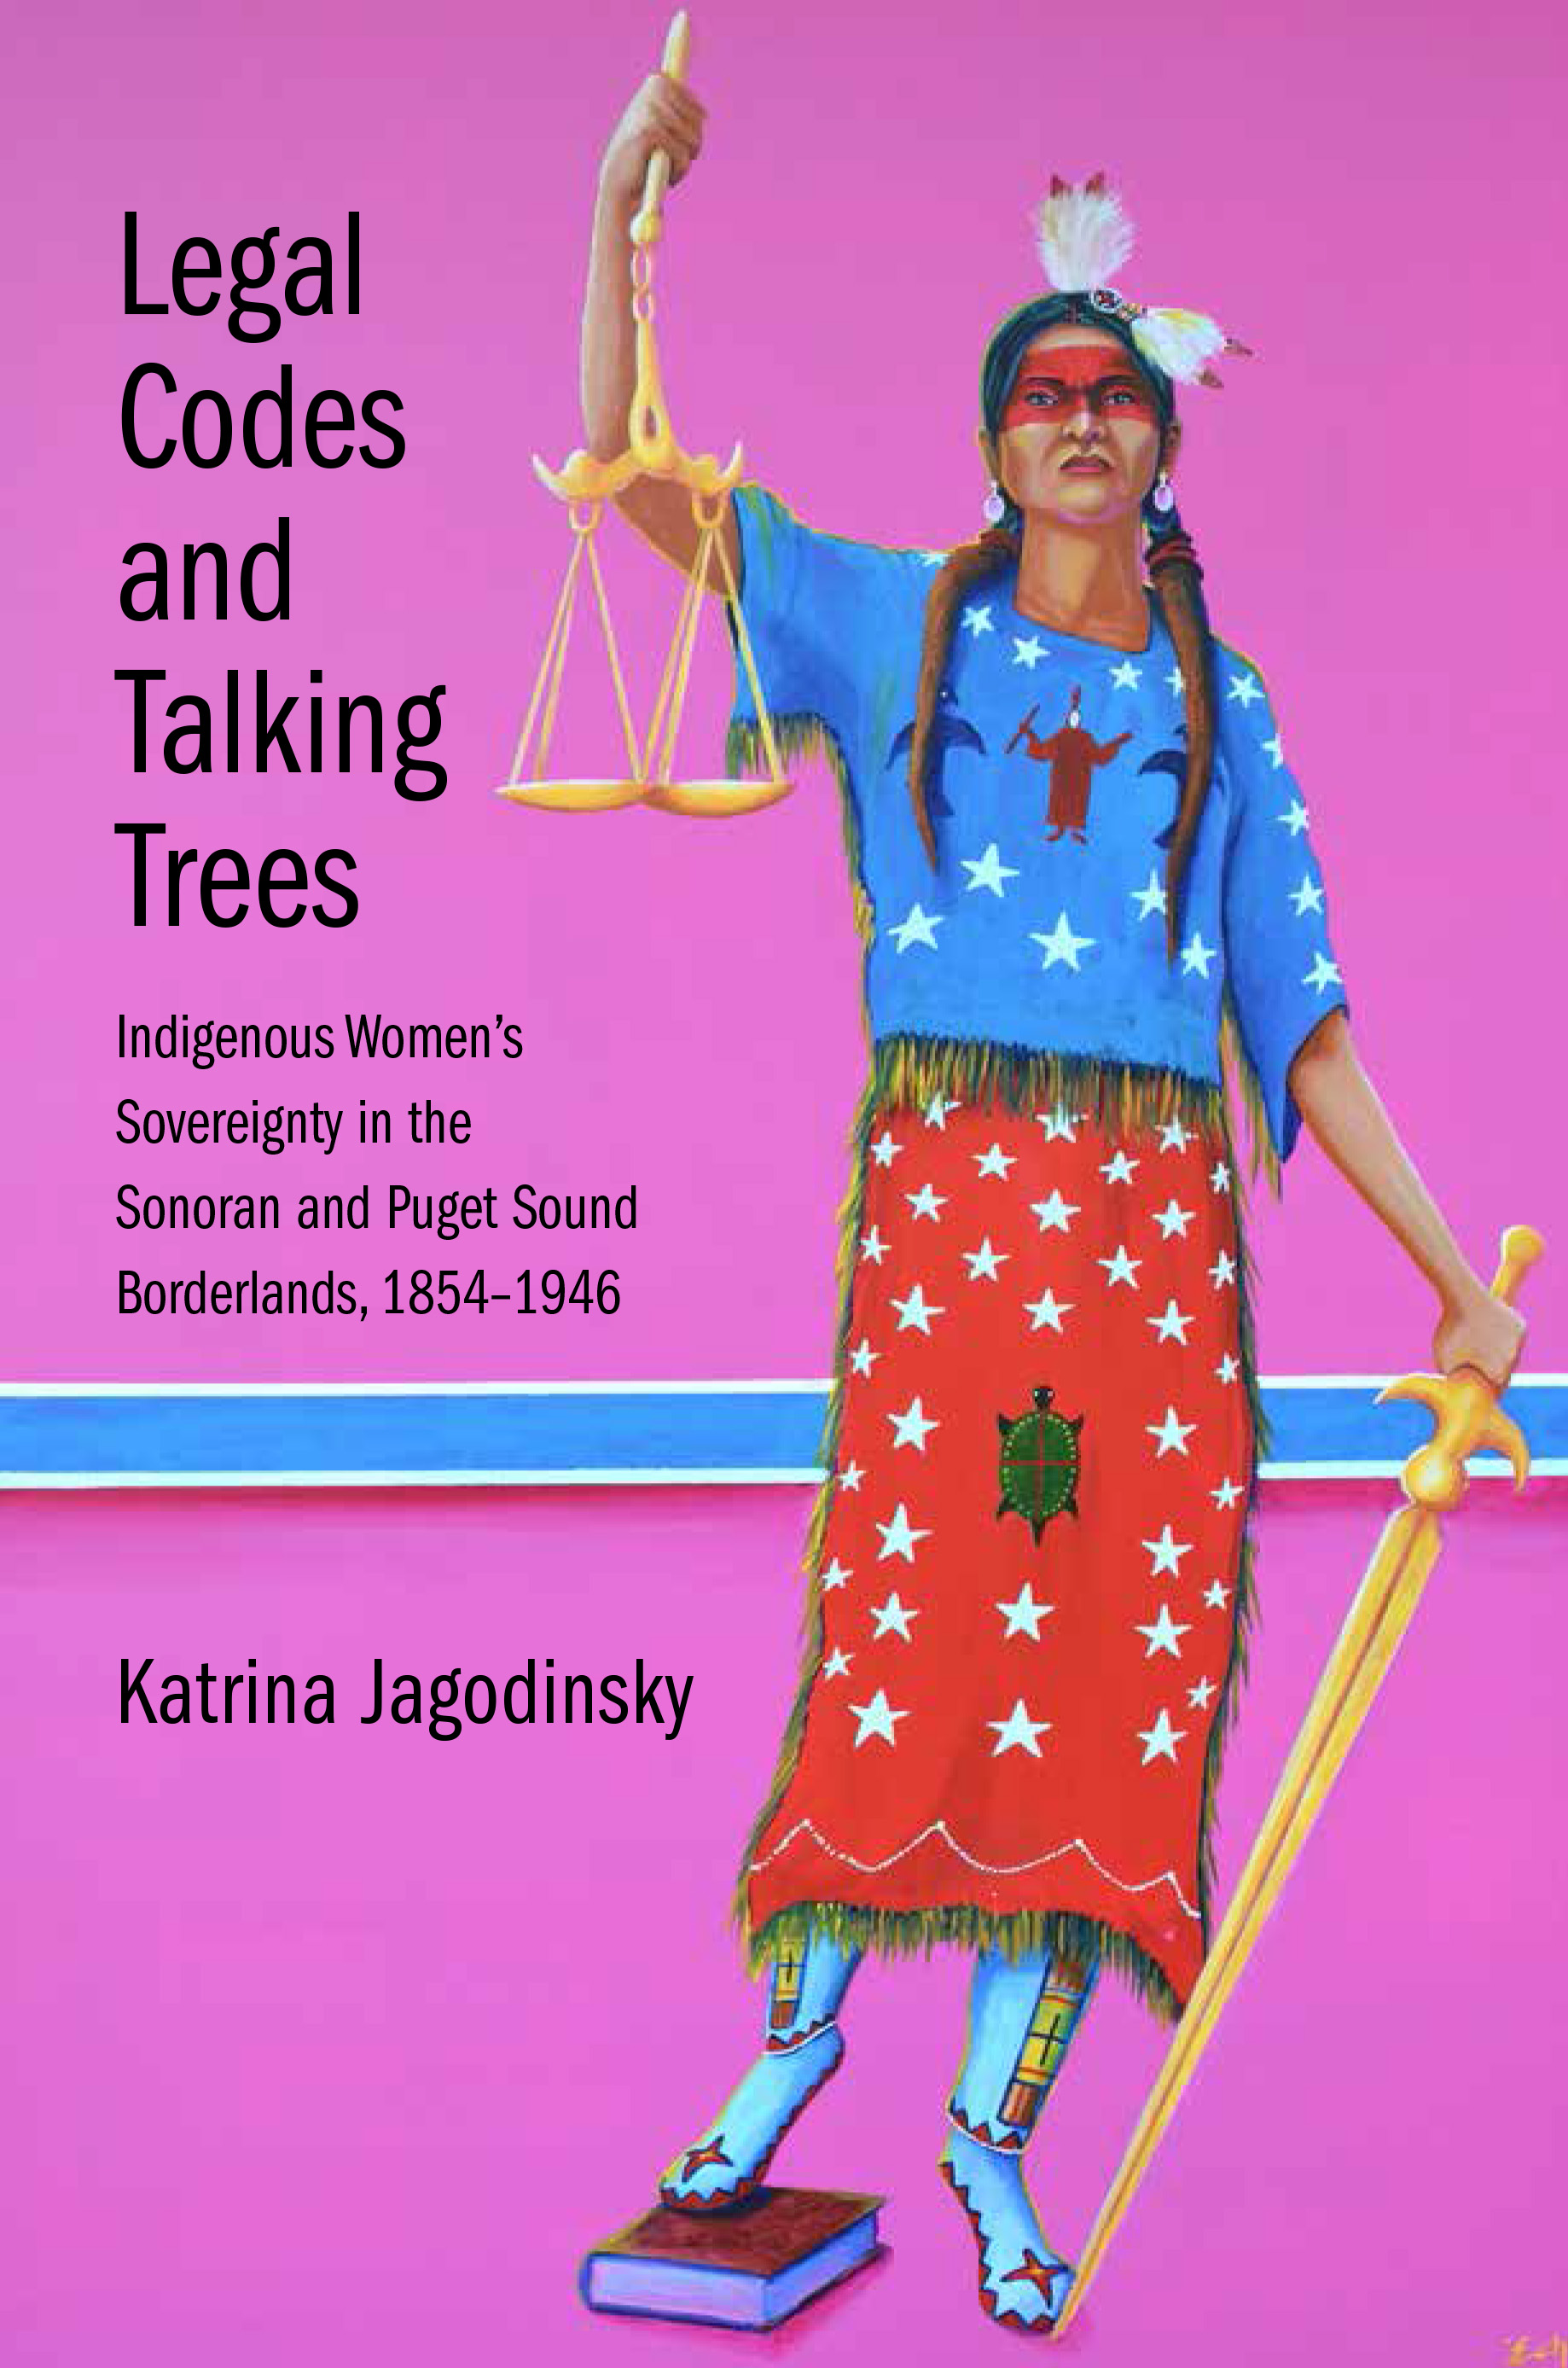 WGS Colloquium: Dr. Katrina Jagodinsky